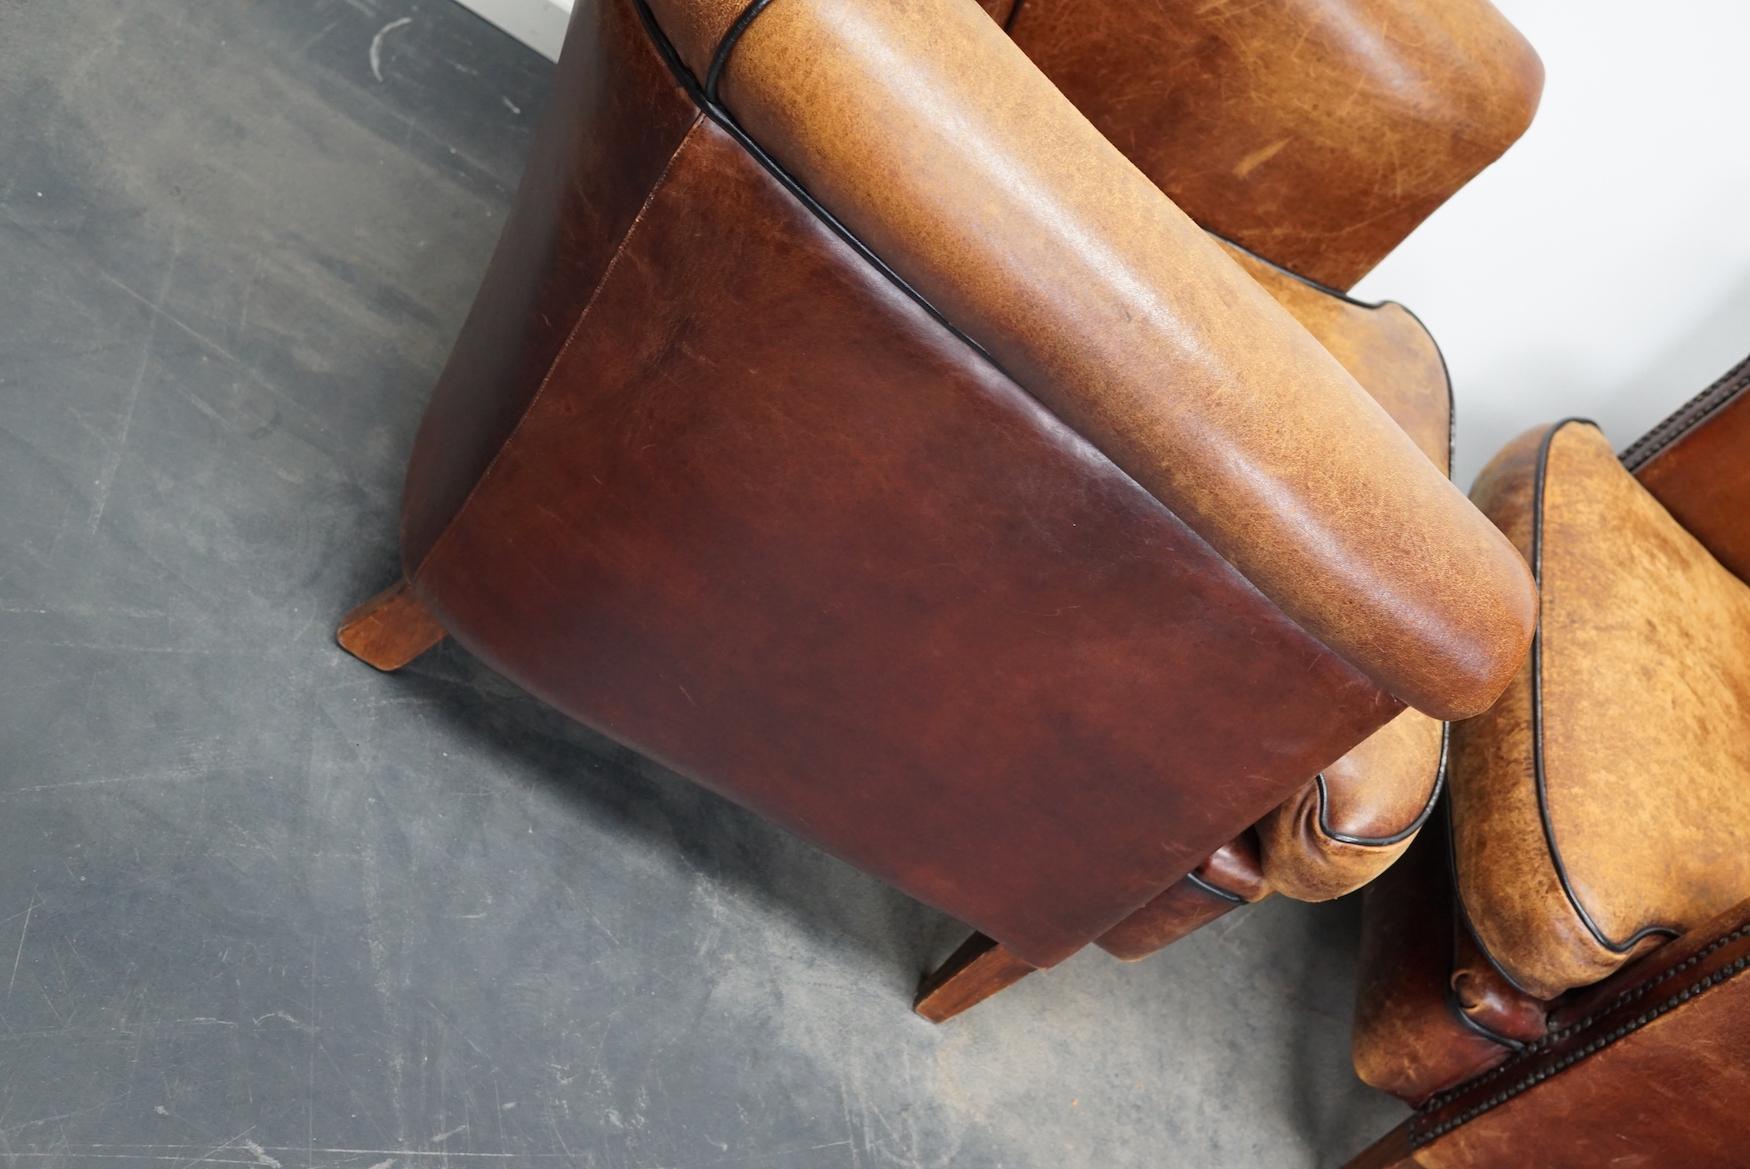 Vintage Dutch Cognac Leather Club Chairs, Set of 2 7